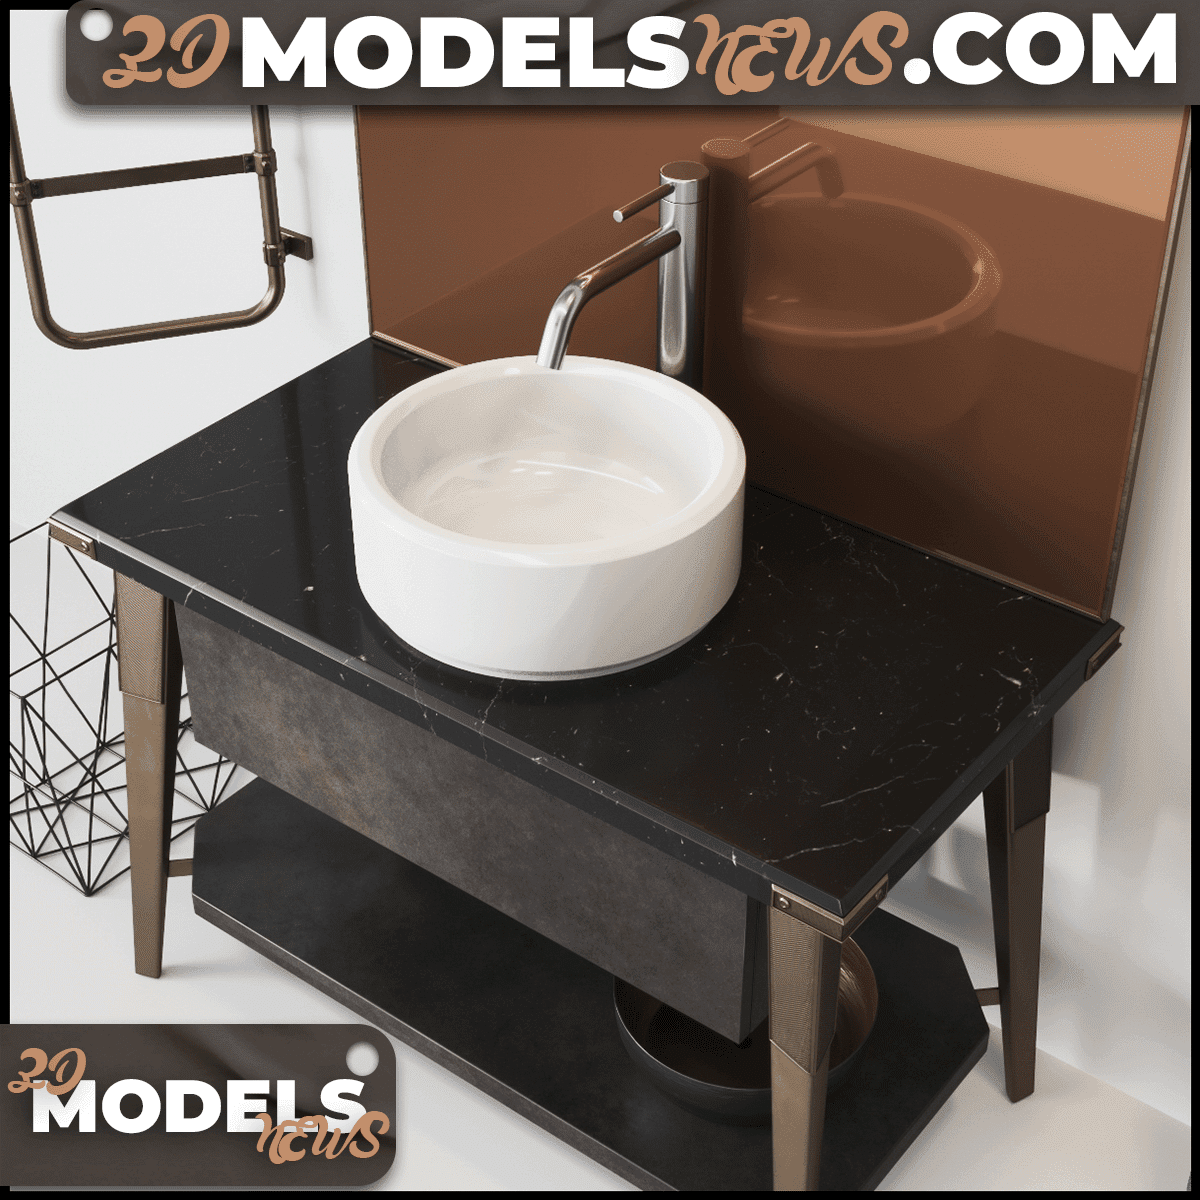 Bathroom Furniture Model Diesel Scavolini Wash Basin 2